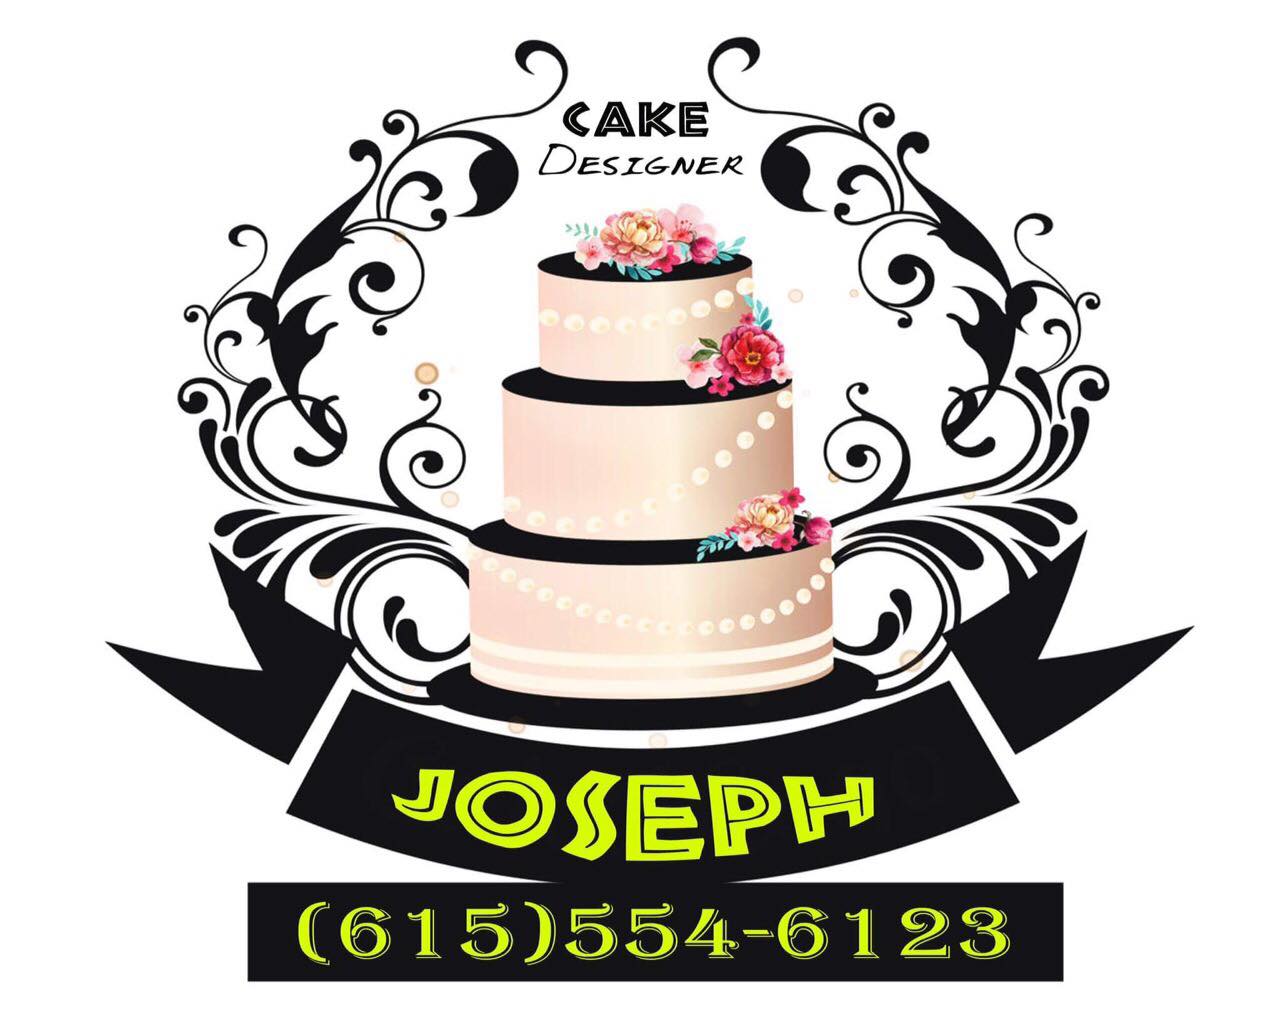 Joseph's Cake